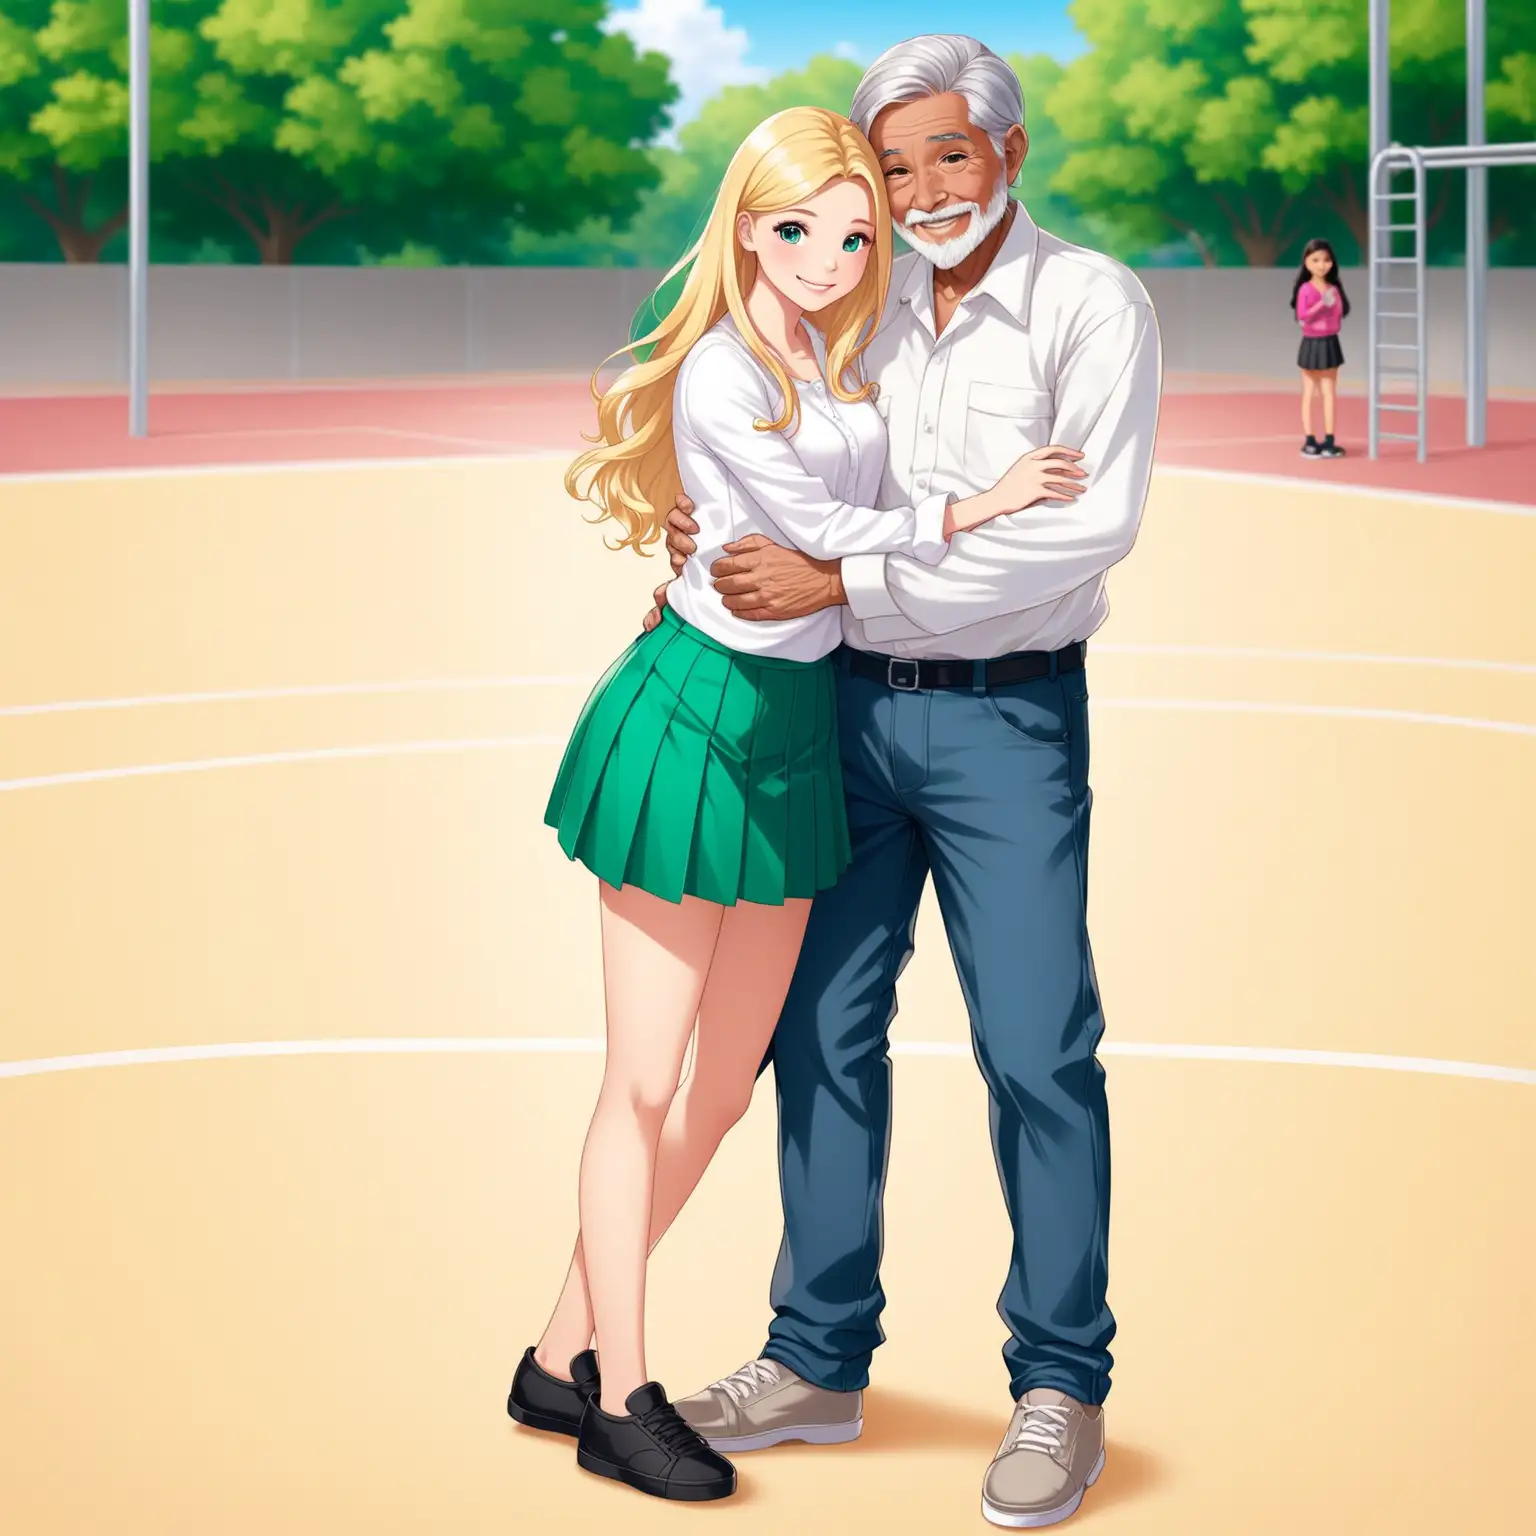 Teenage Girl in Silk Skirt Cuddling with GrayHaired Man in Playground